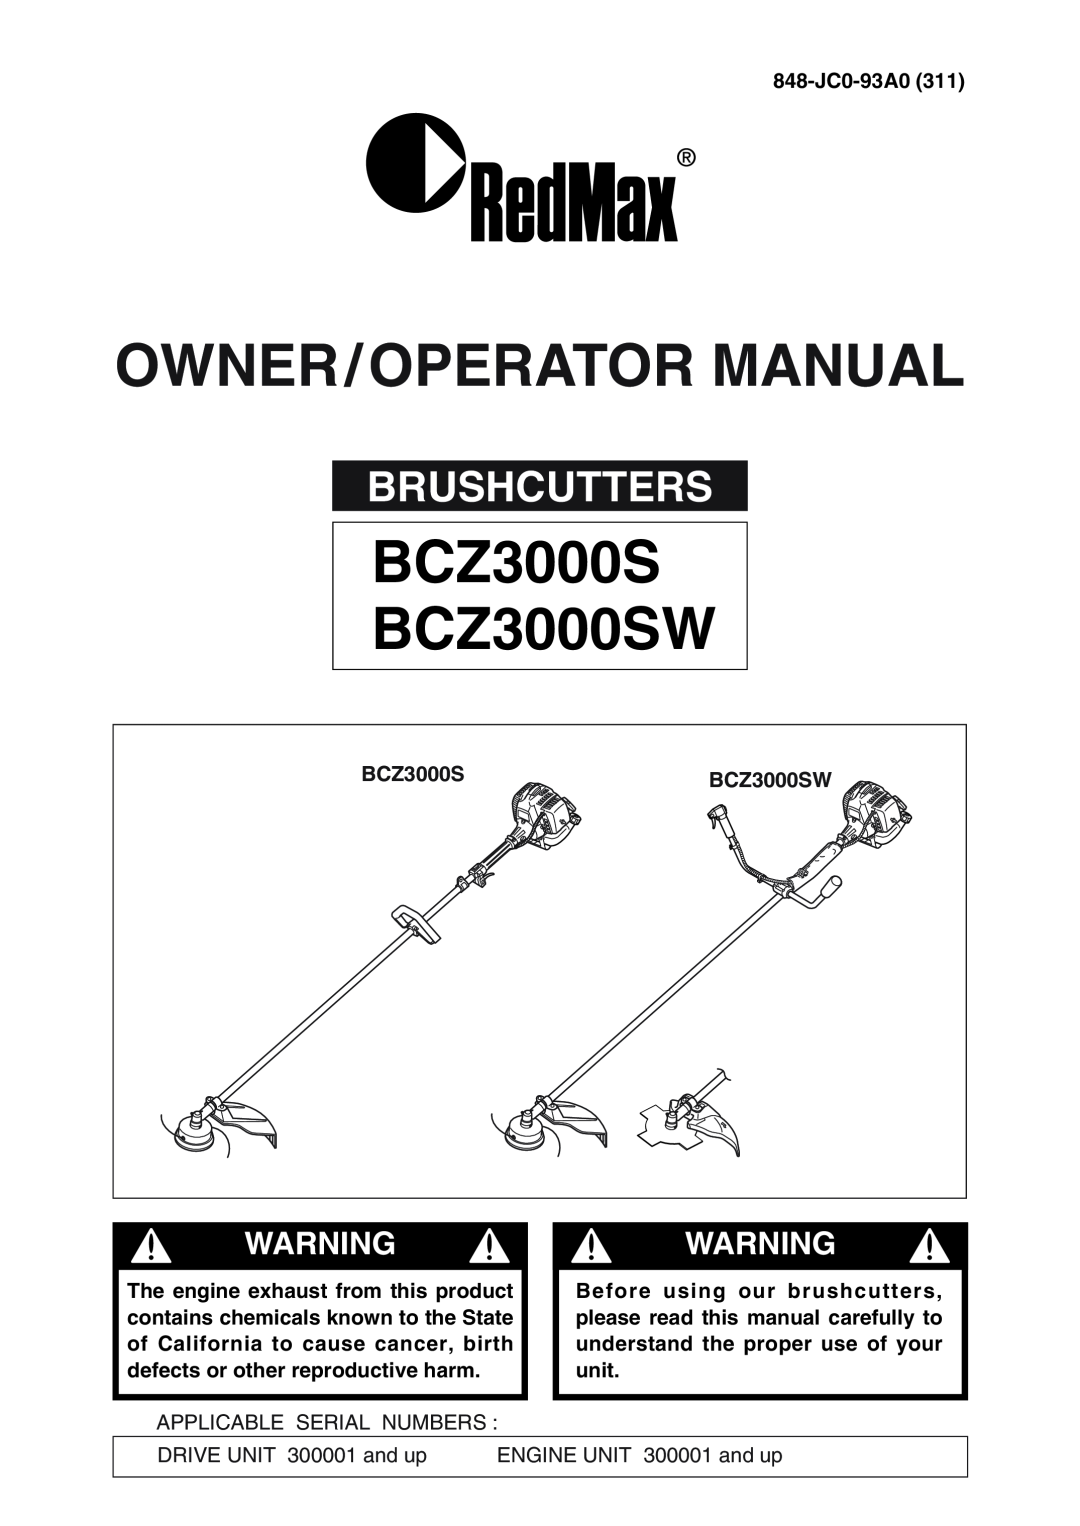 Zenoah manual Owner/Operator Manual, BCZ3000S BCZ3000SW, Brushcutters, 848-JC0-93A0311, Warningwarning 